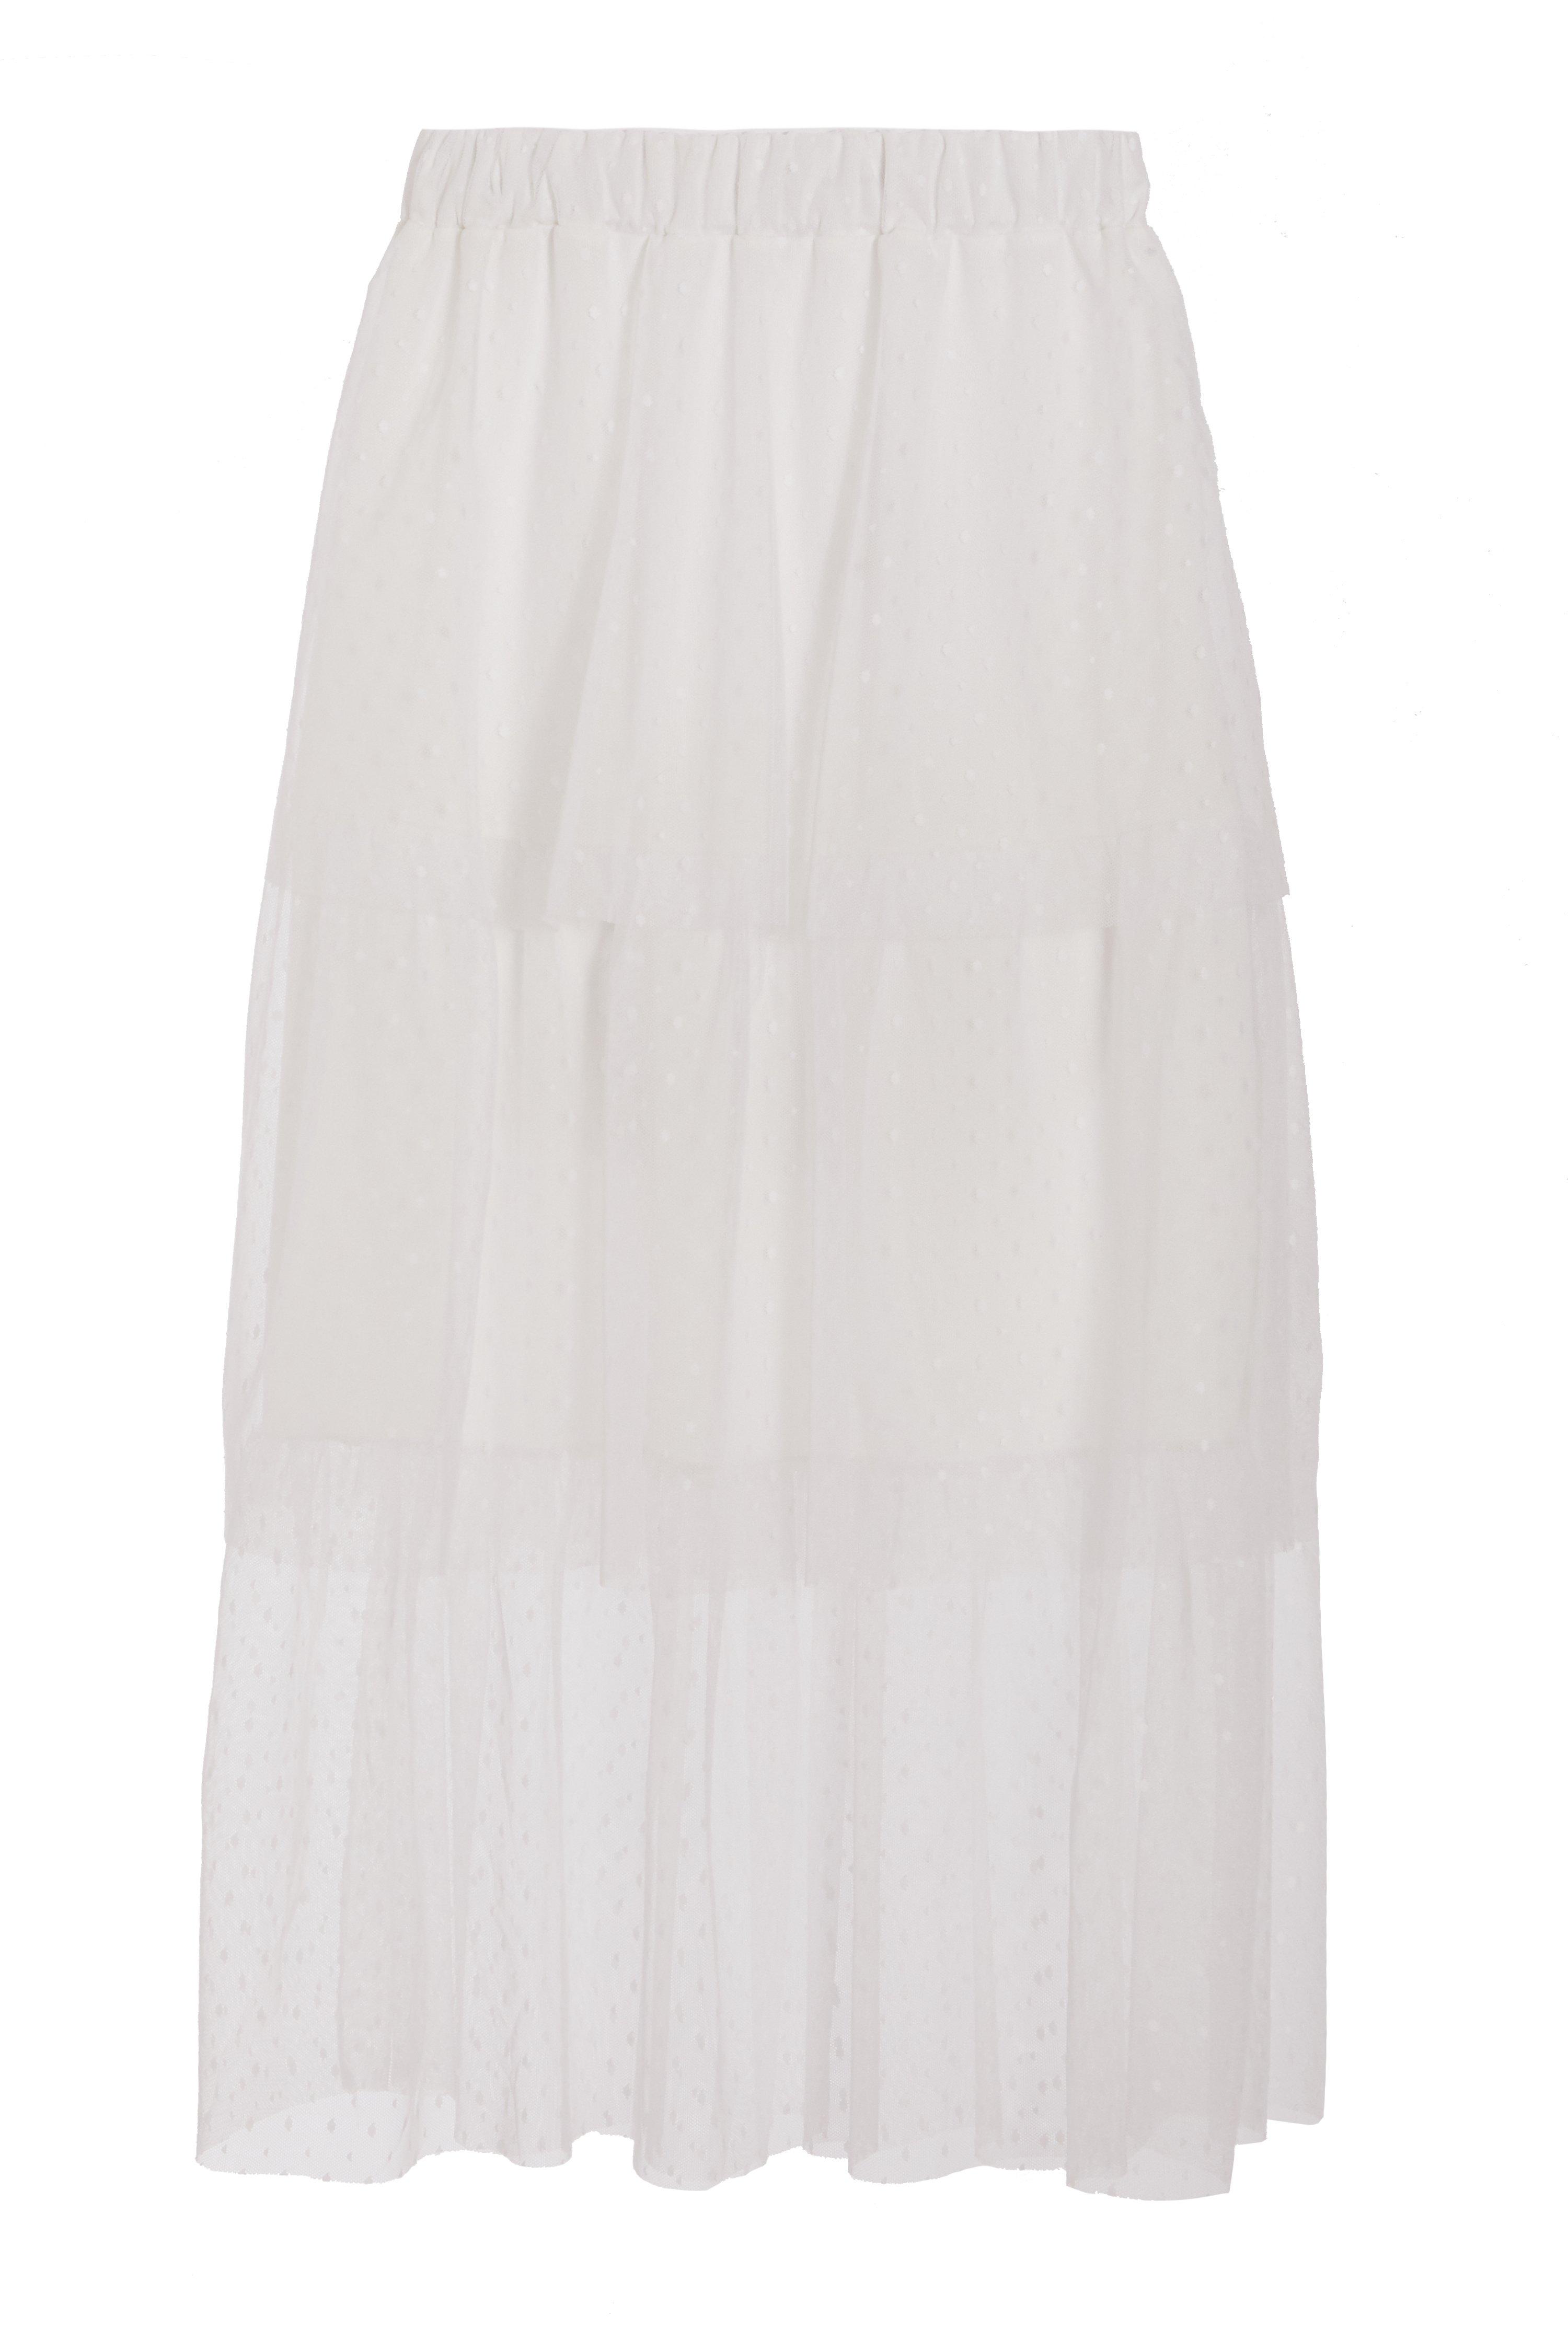 White Tiered Polka Dot Mesh Skirt - Quiz Clothing